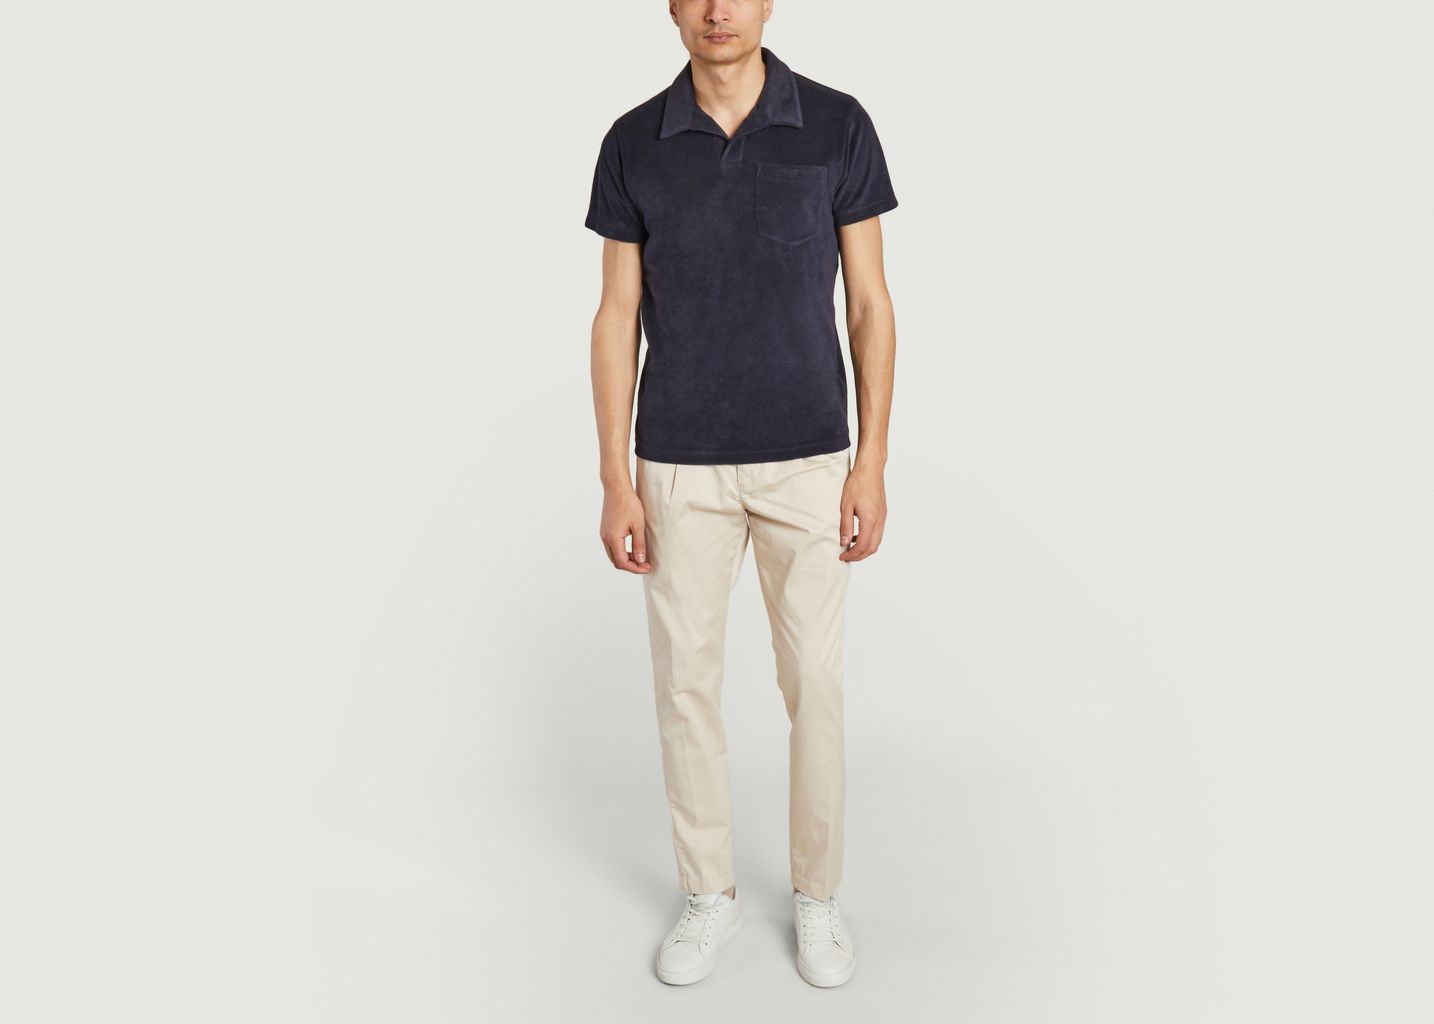 Terry Cloth Polo shirt - Gant